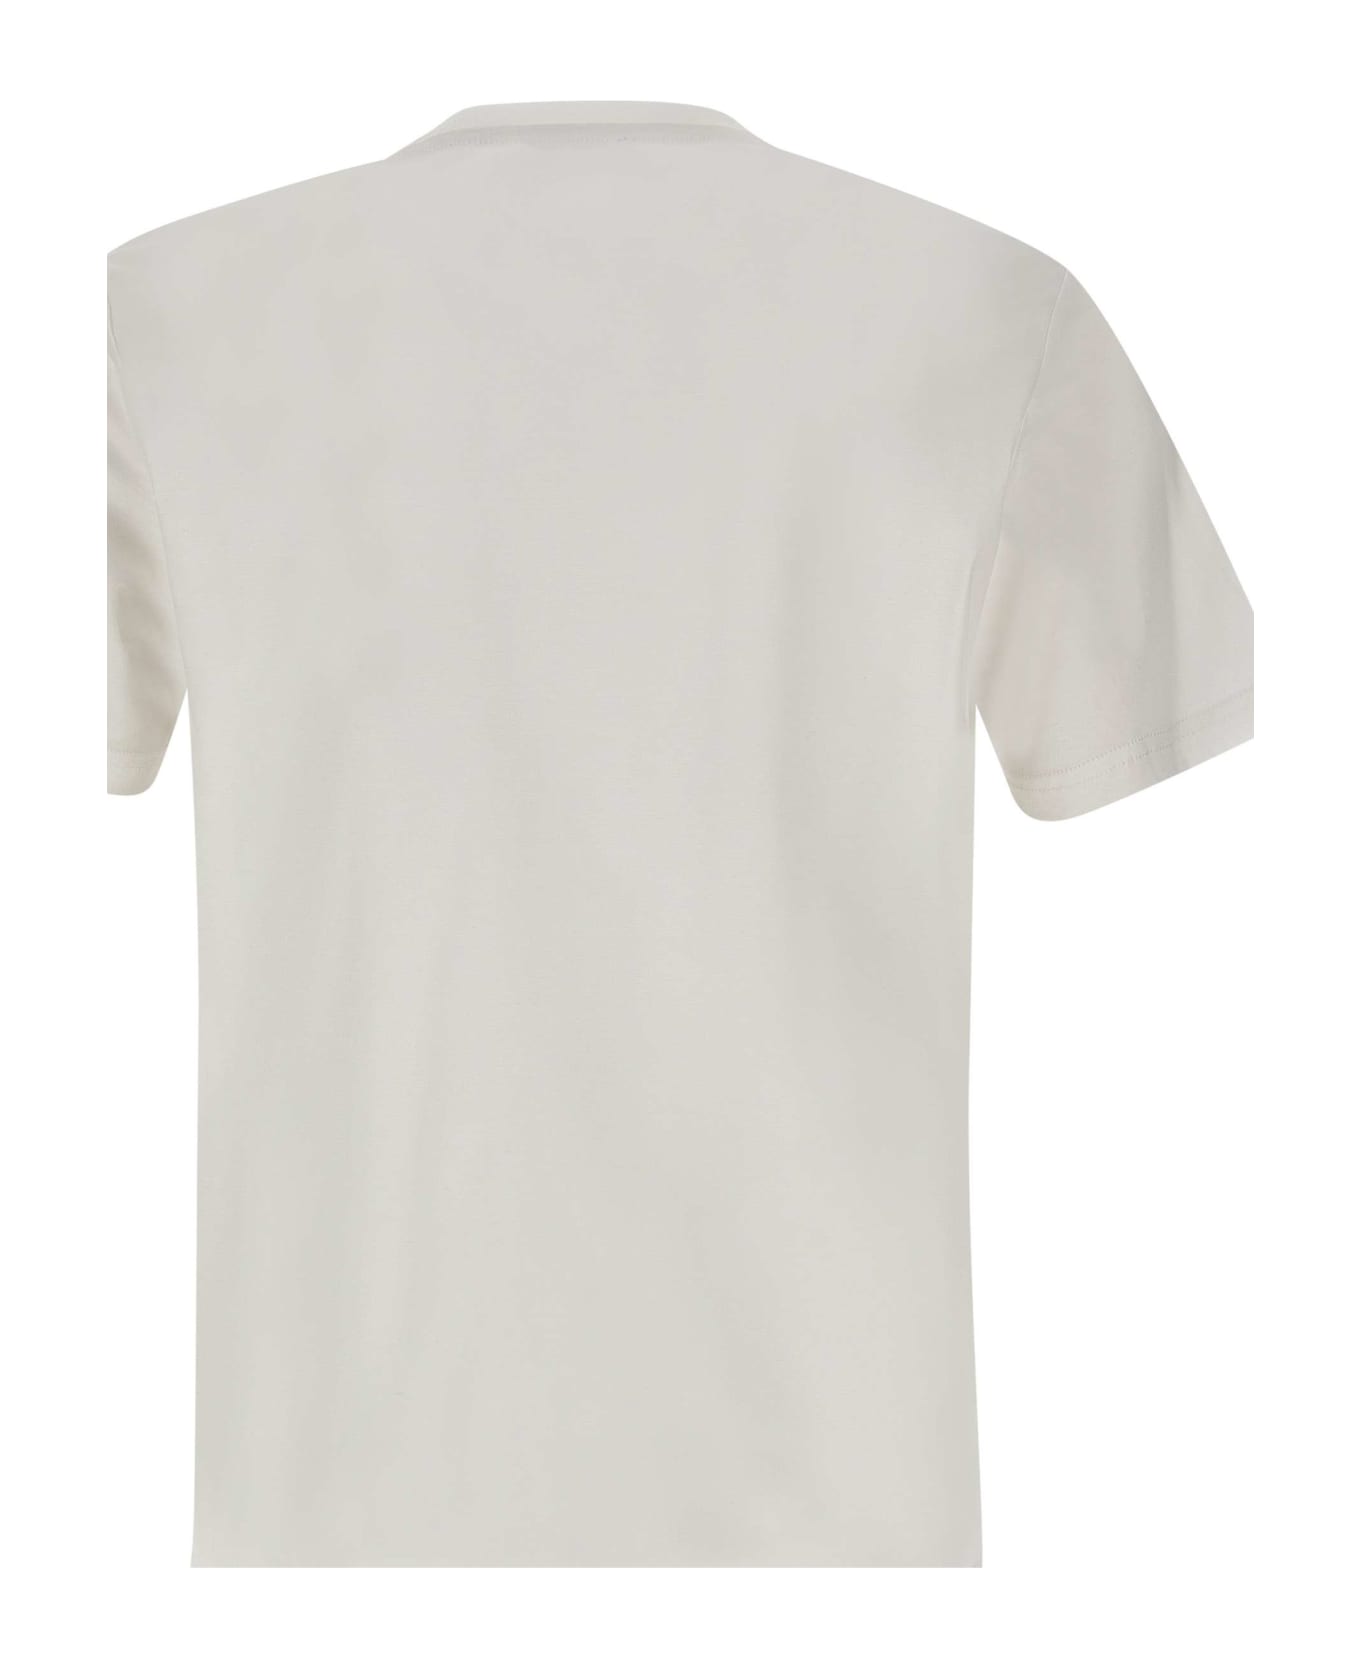 Peuterey 'cleats Mer' Cotton T-shirt - White